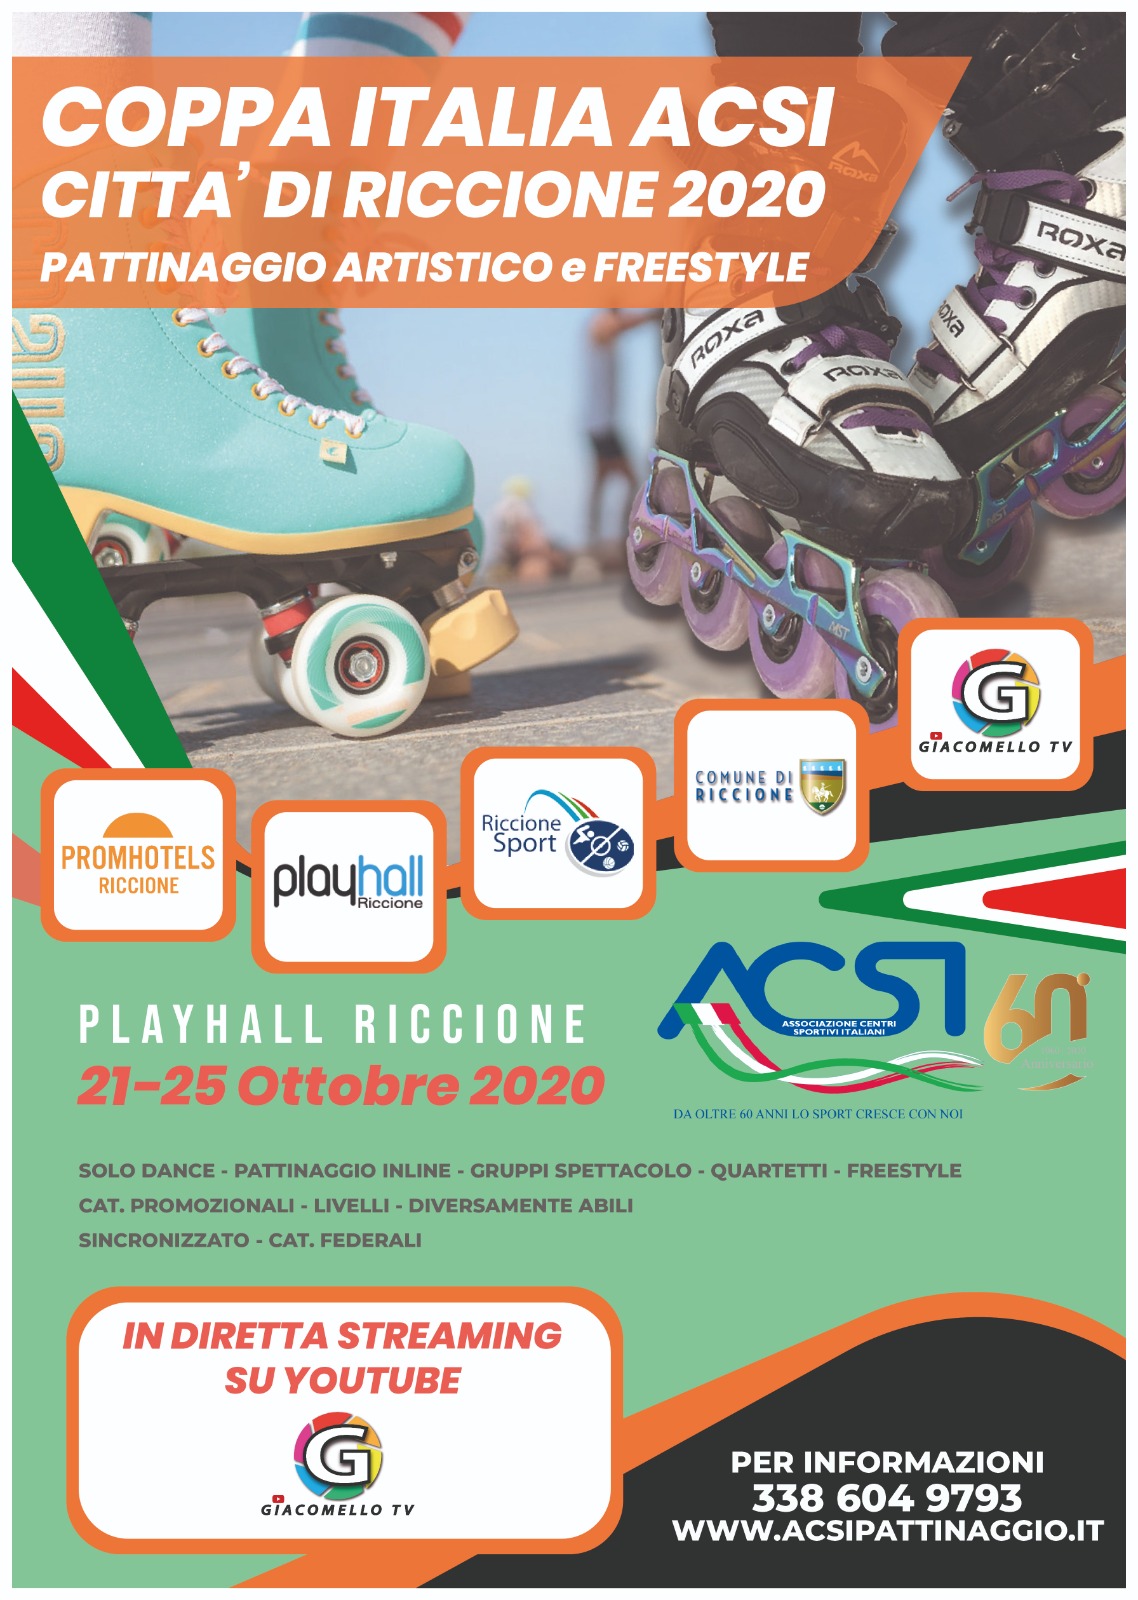 Locandina Coppa Italia ACSI Riccione 2020 - IMG-20200921-WA0003